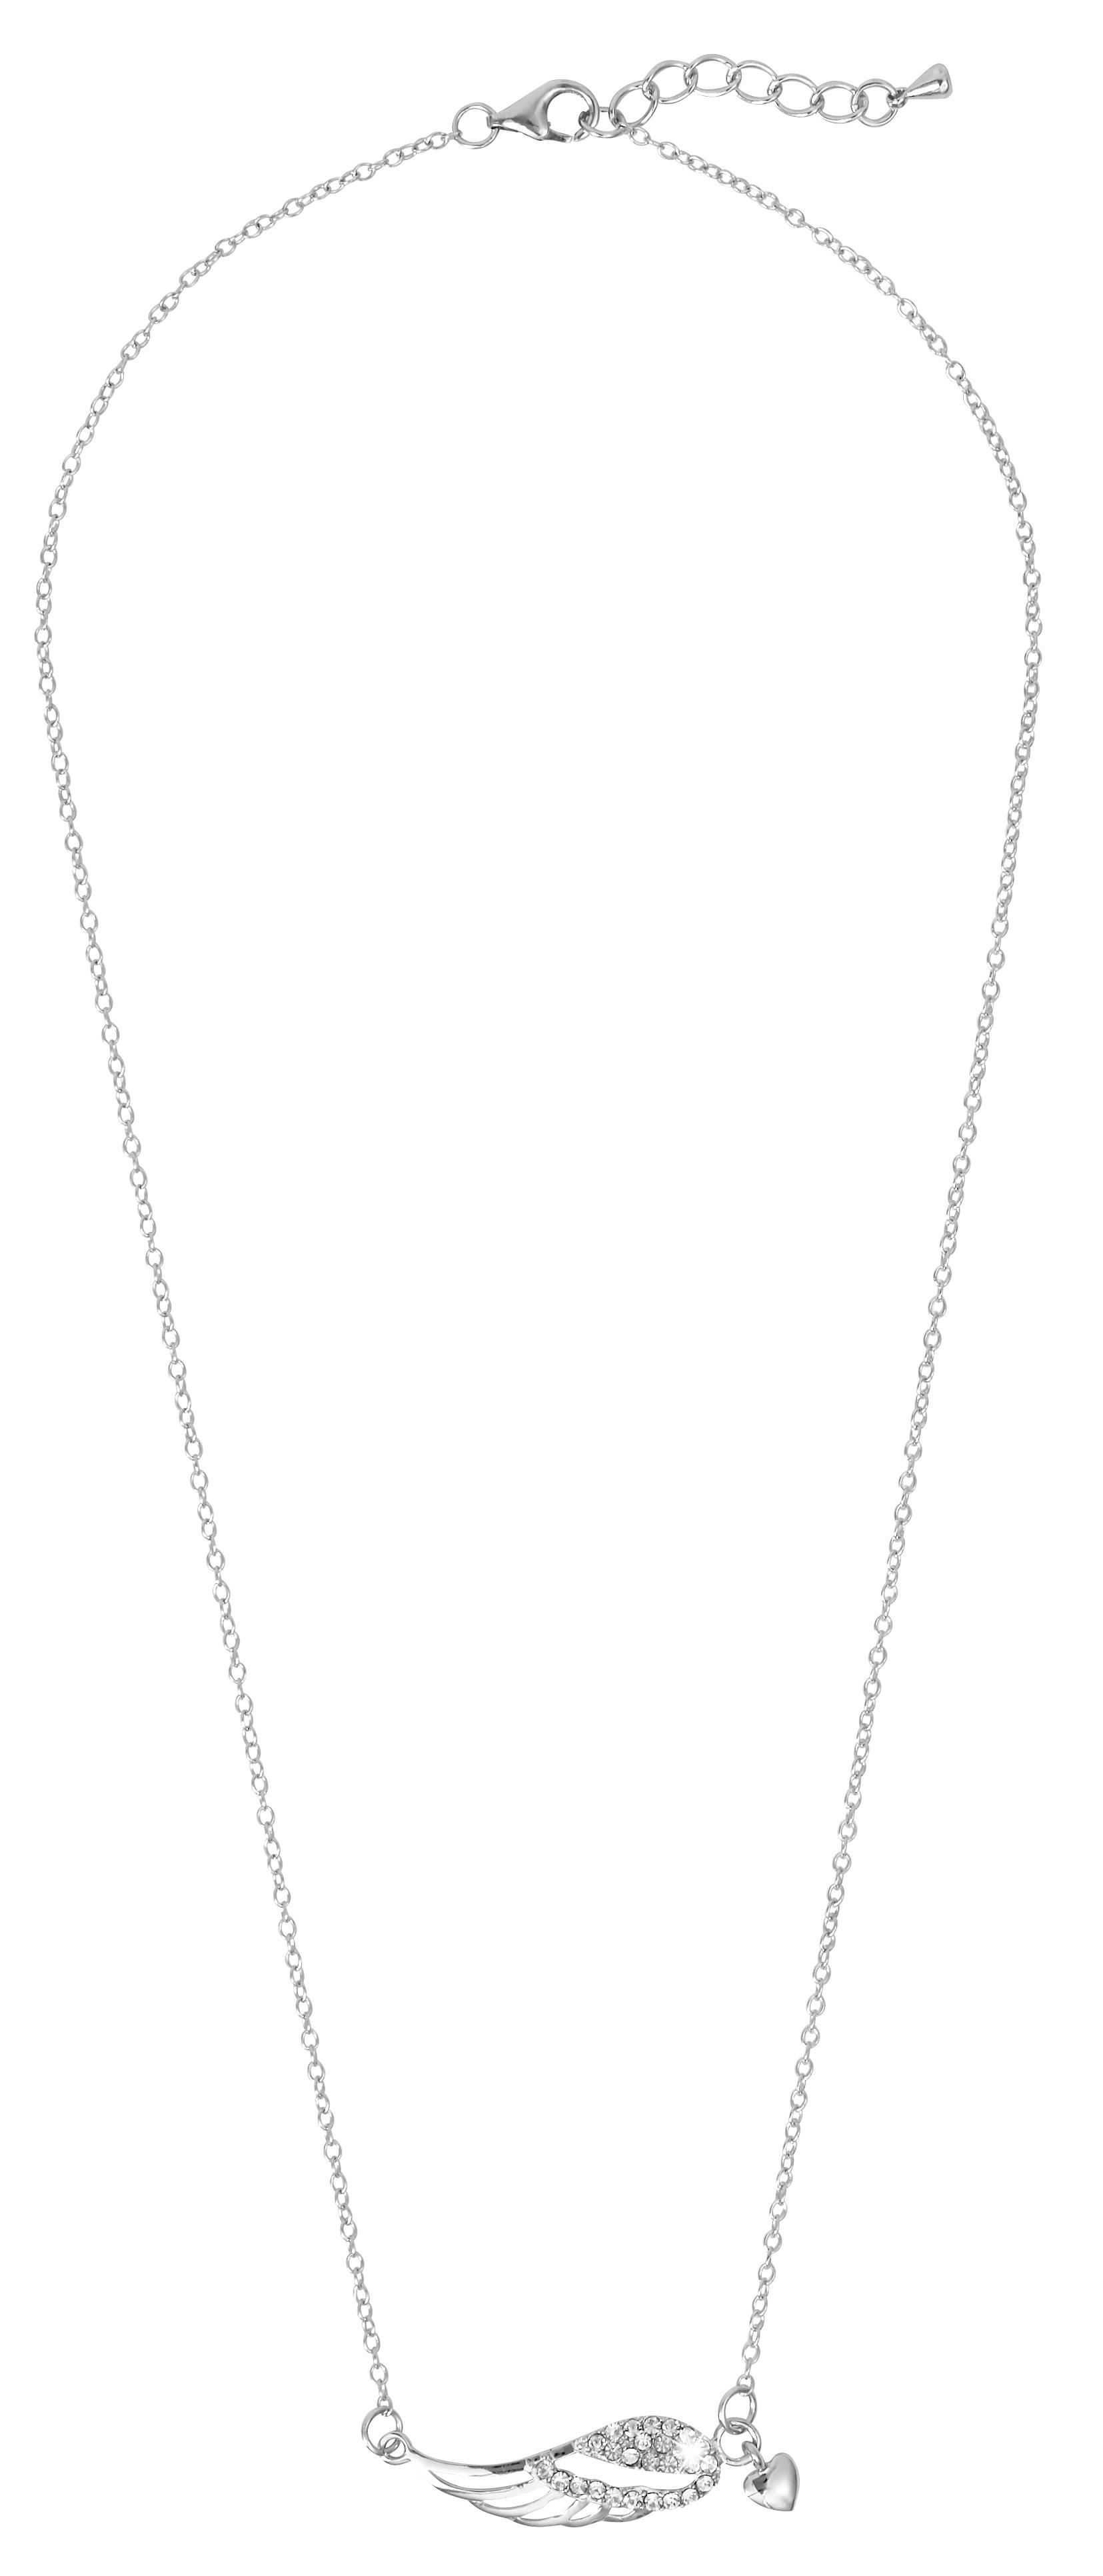 Necklace - Glamorous Wing